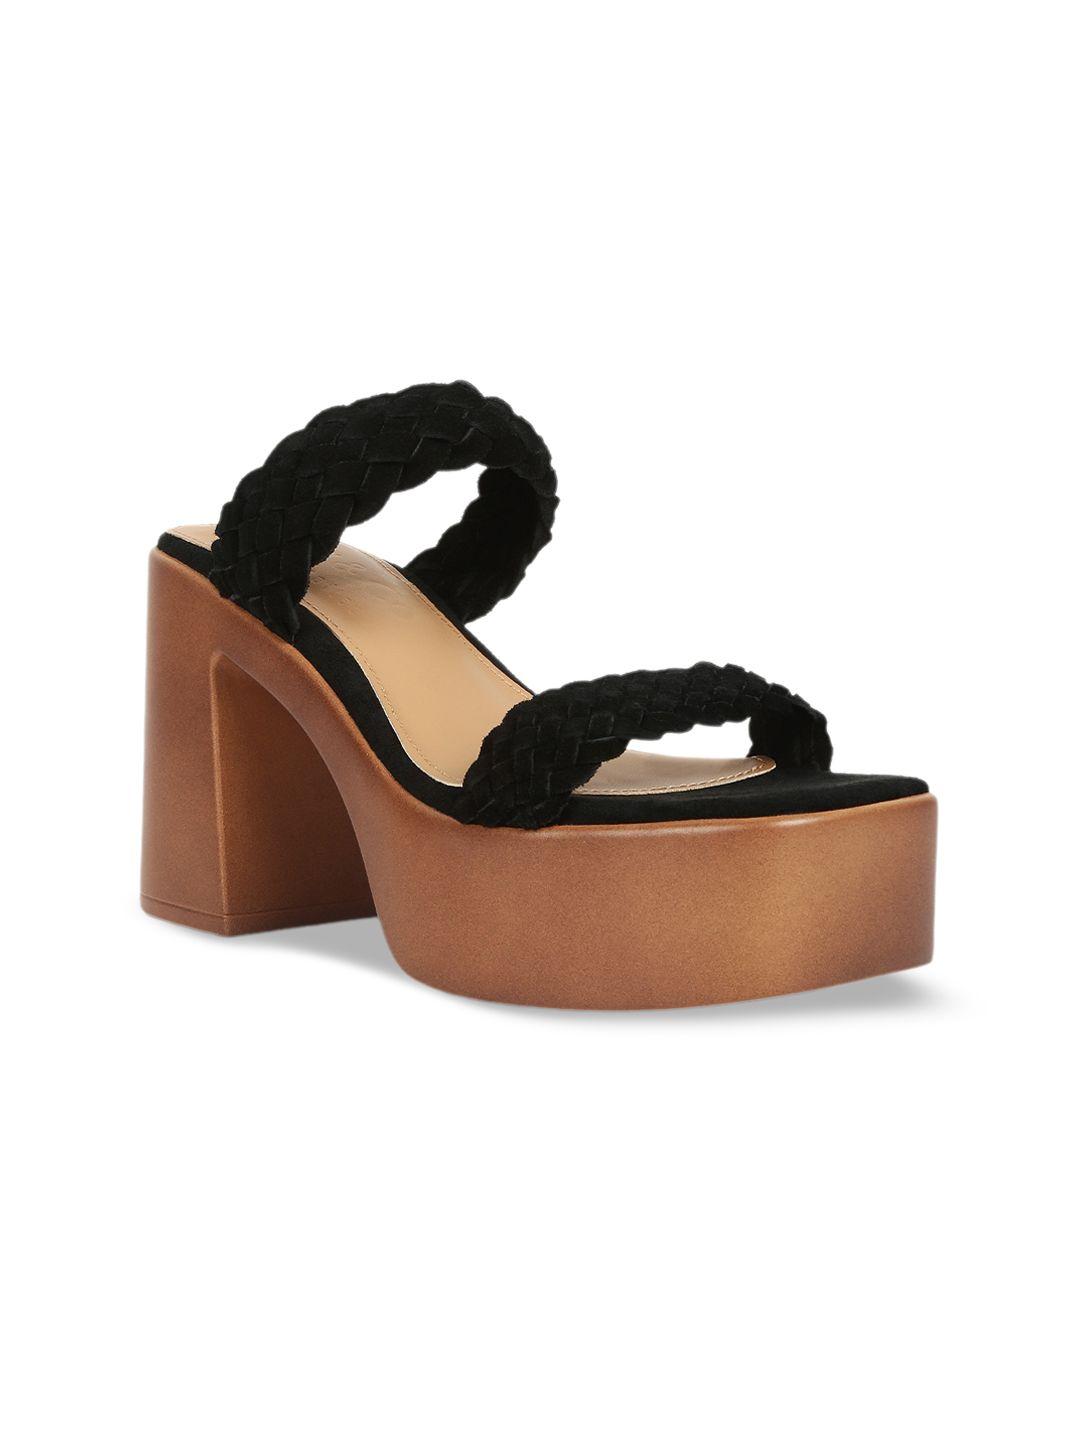 rag & co open toe suede braided detail platform heels